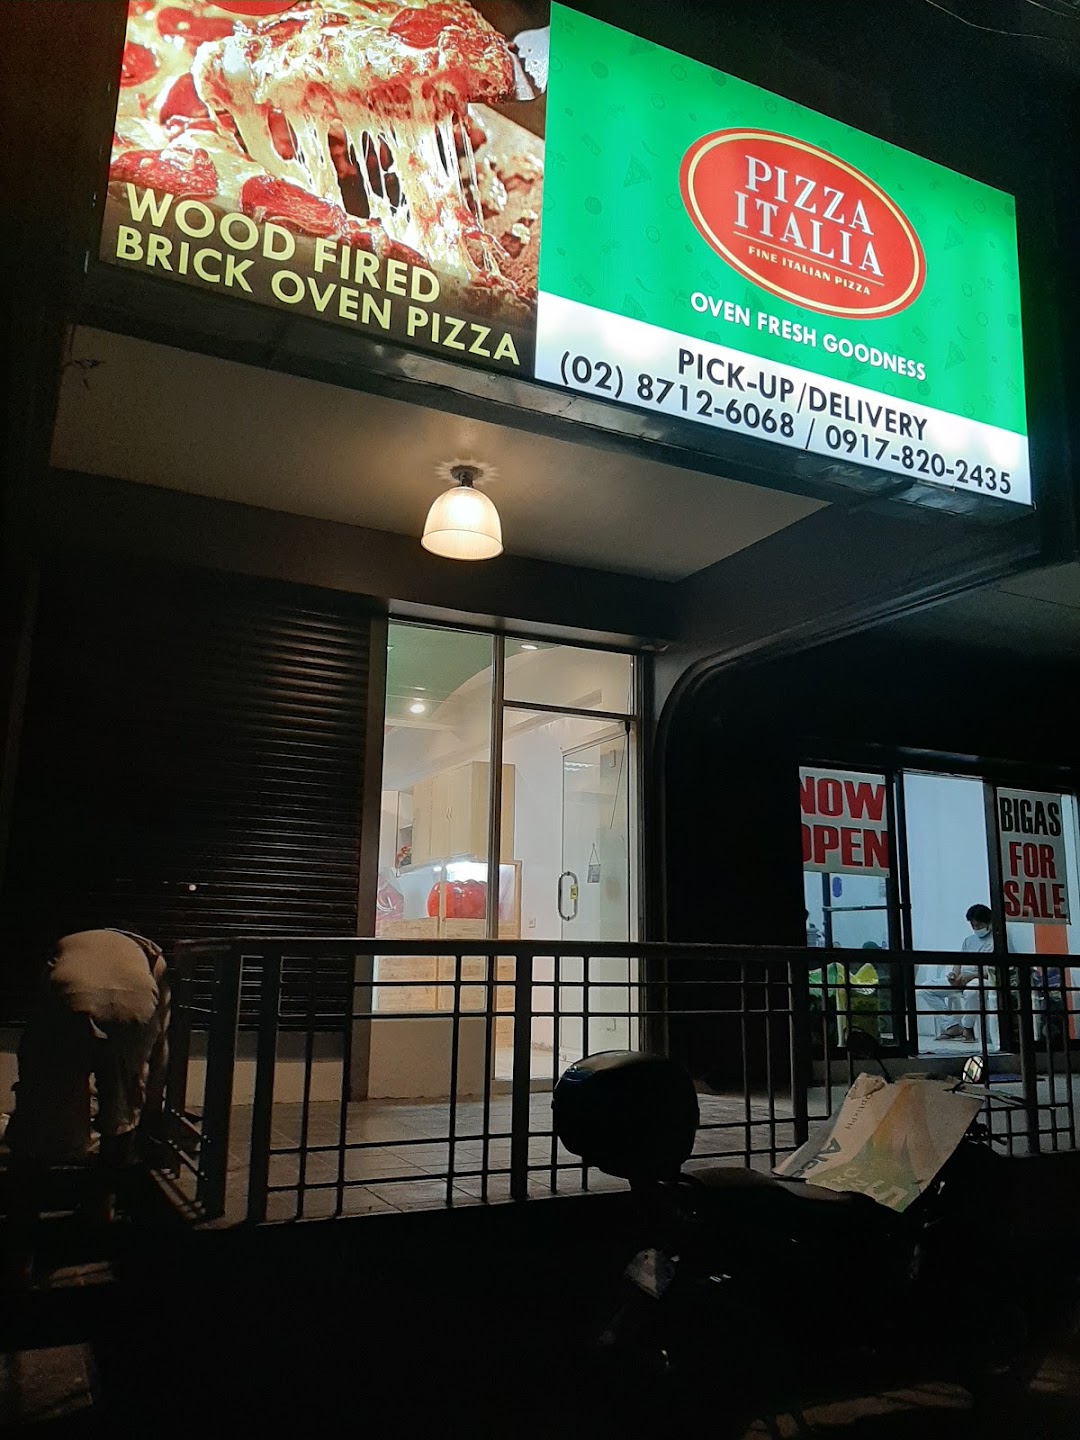 Pizza Italia (Pizzeria Italia) - Timog Avenue